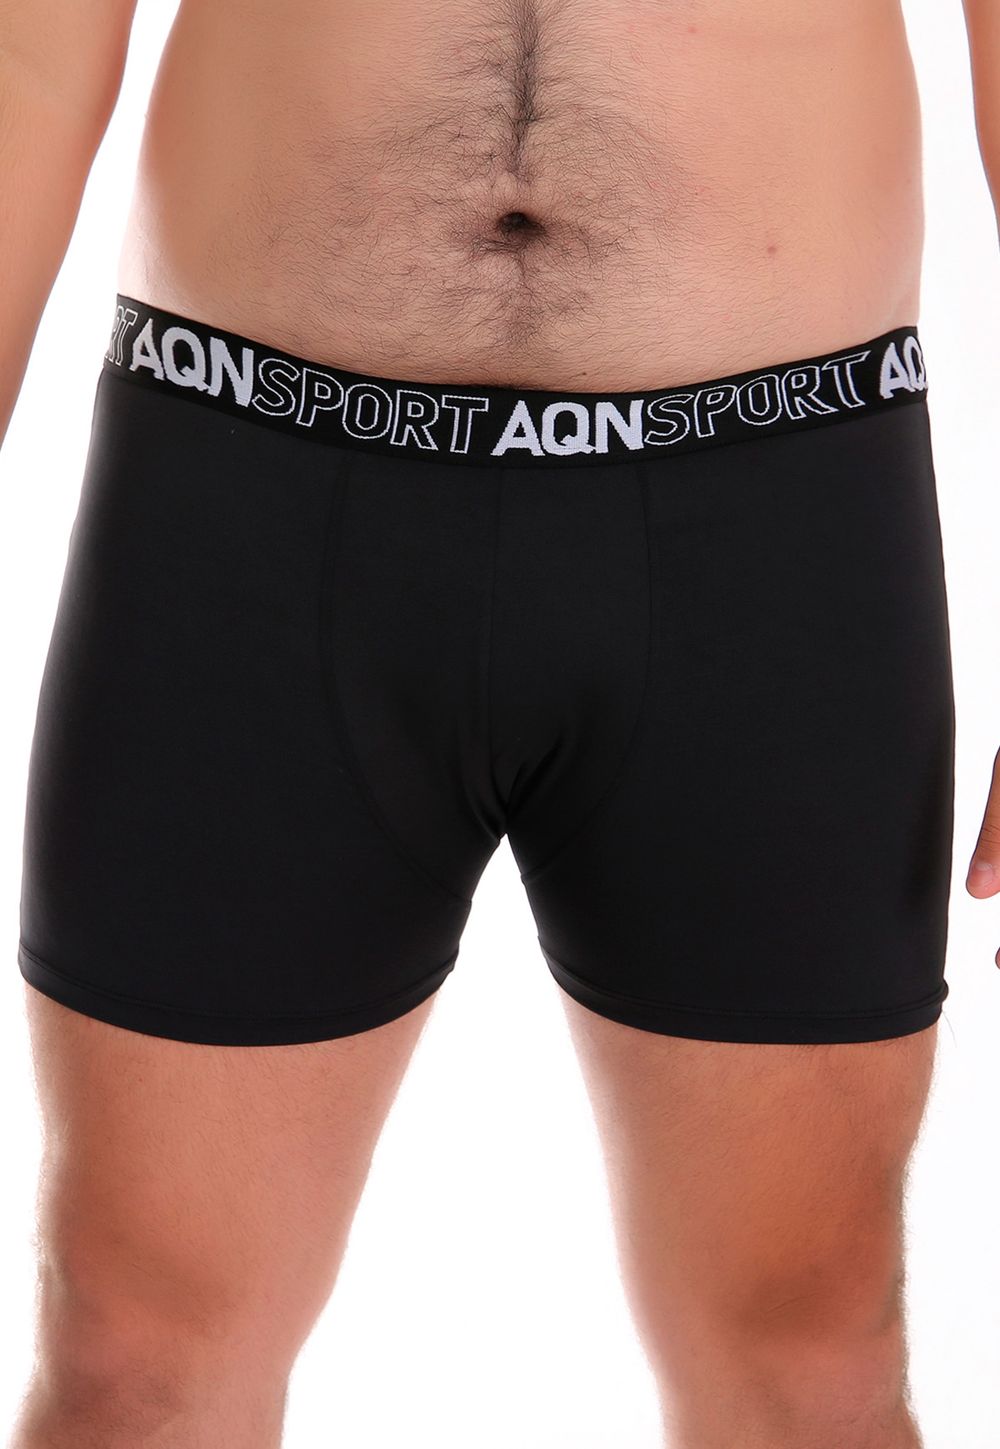 Underwear Box AQN SPORT Plus X1